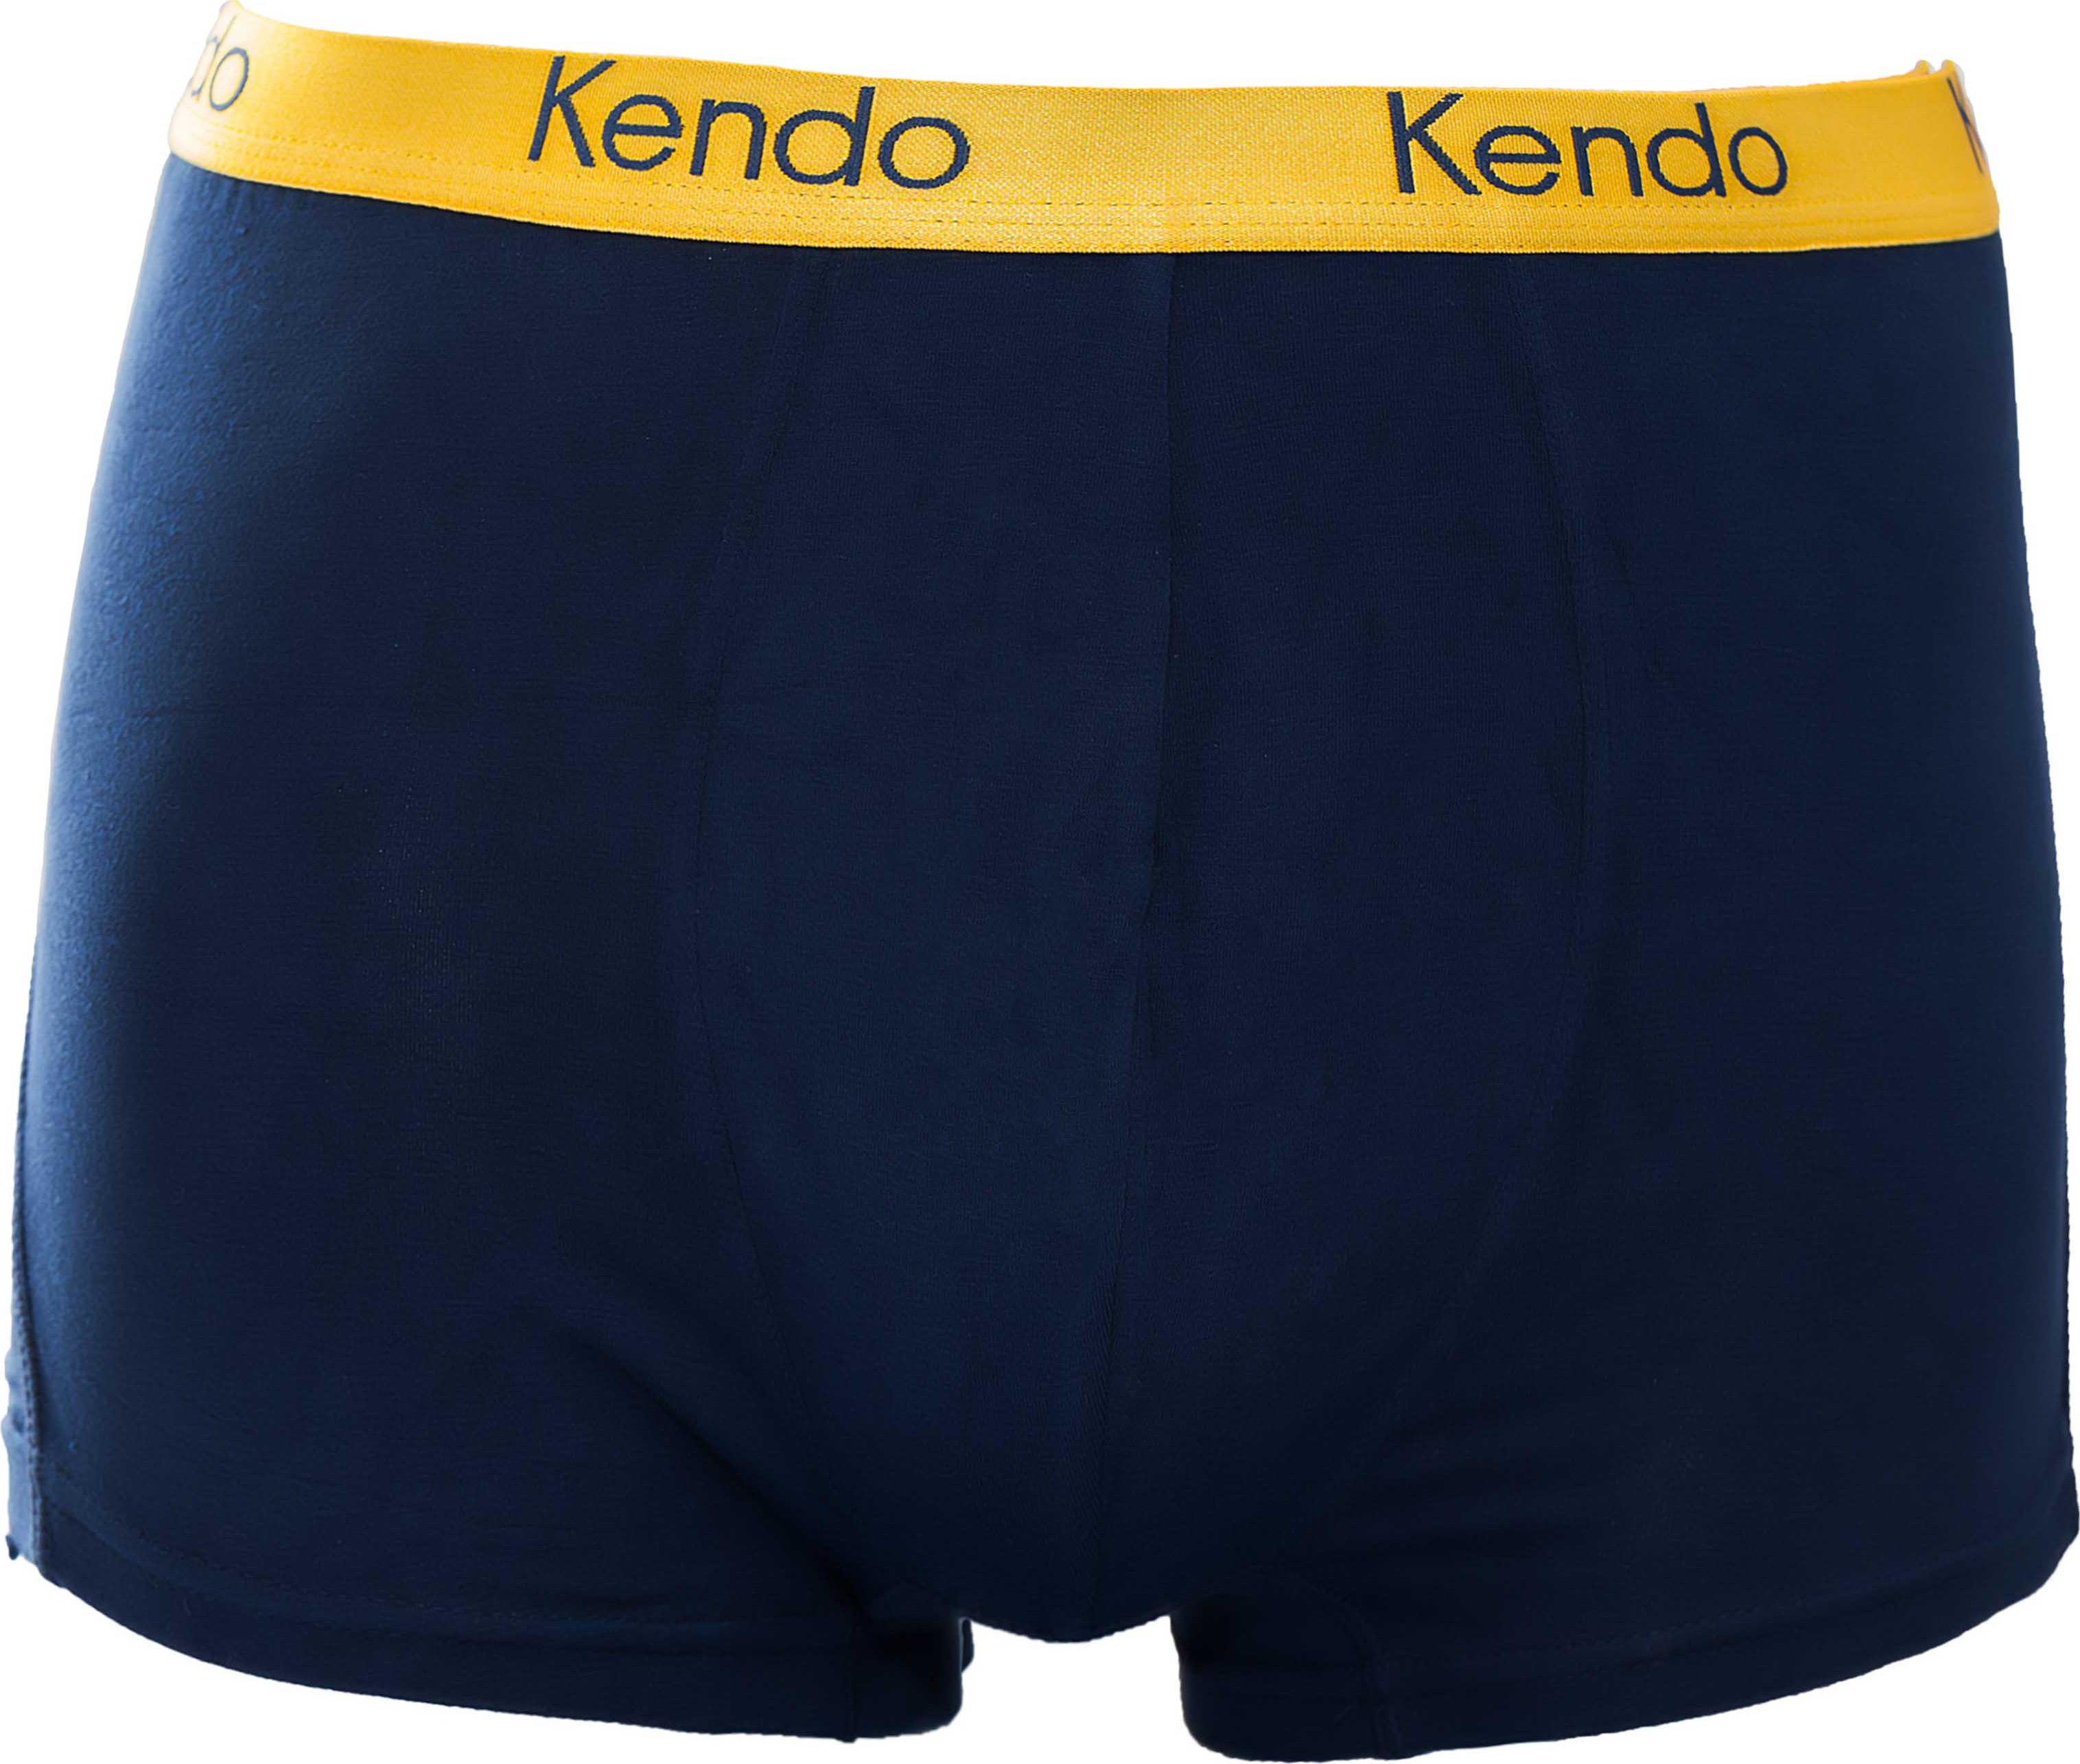 Kendo - Quần lót nam Kendo Boxer Gold Men's Underwear